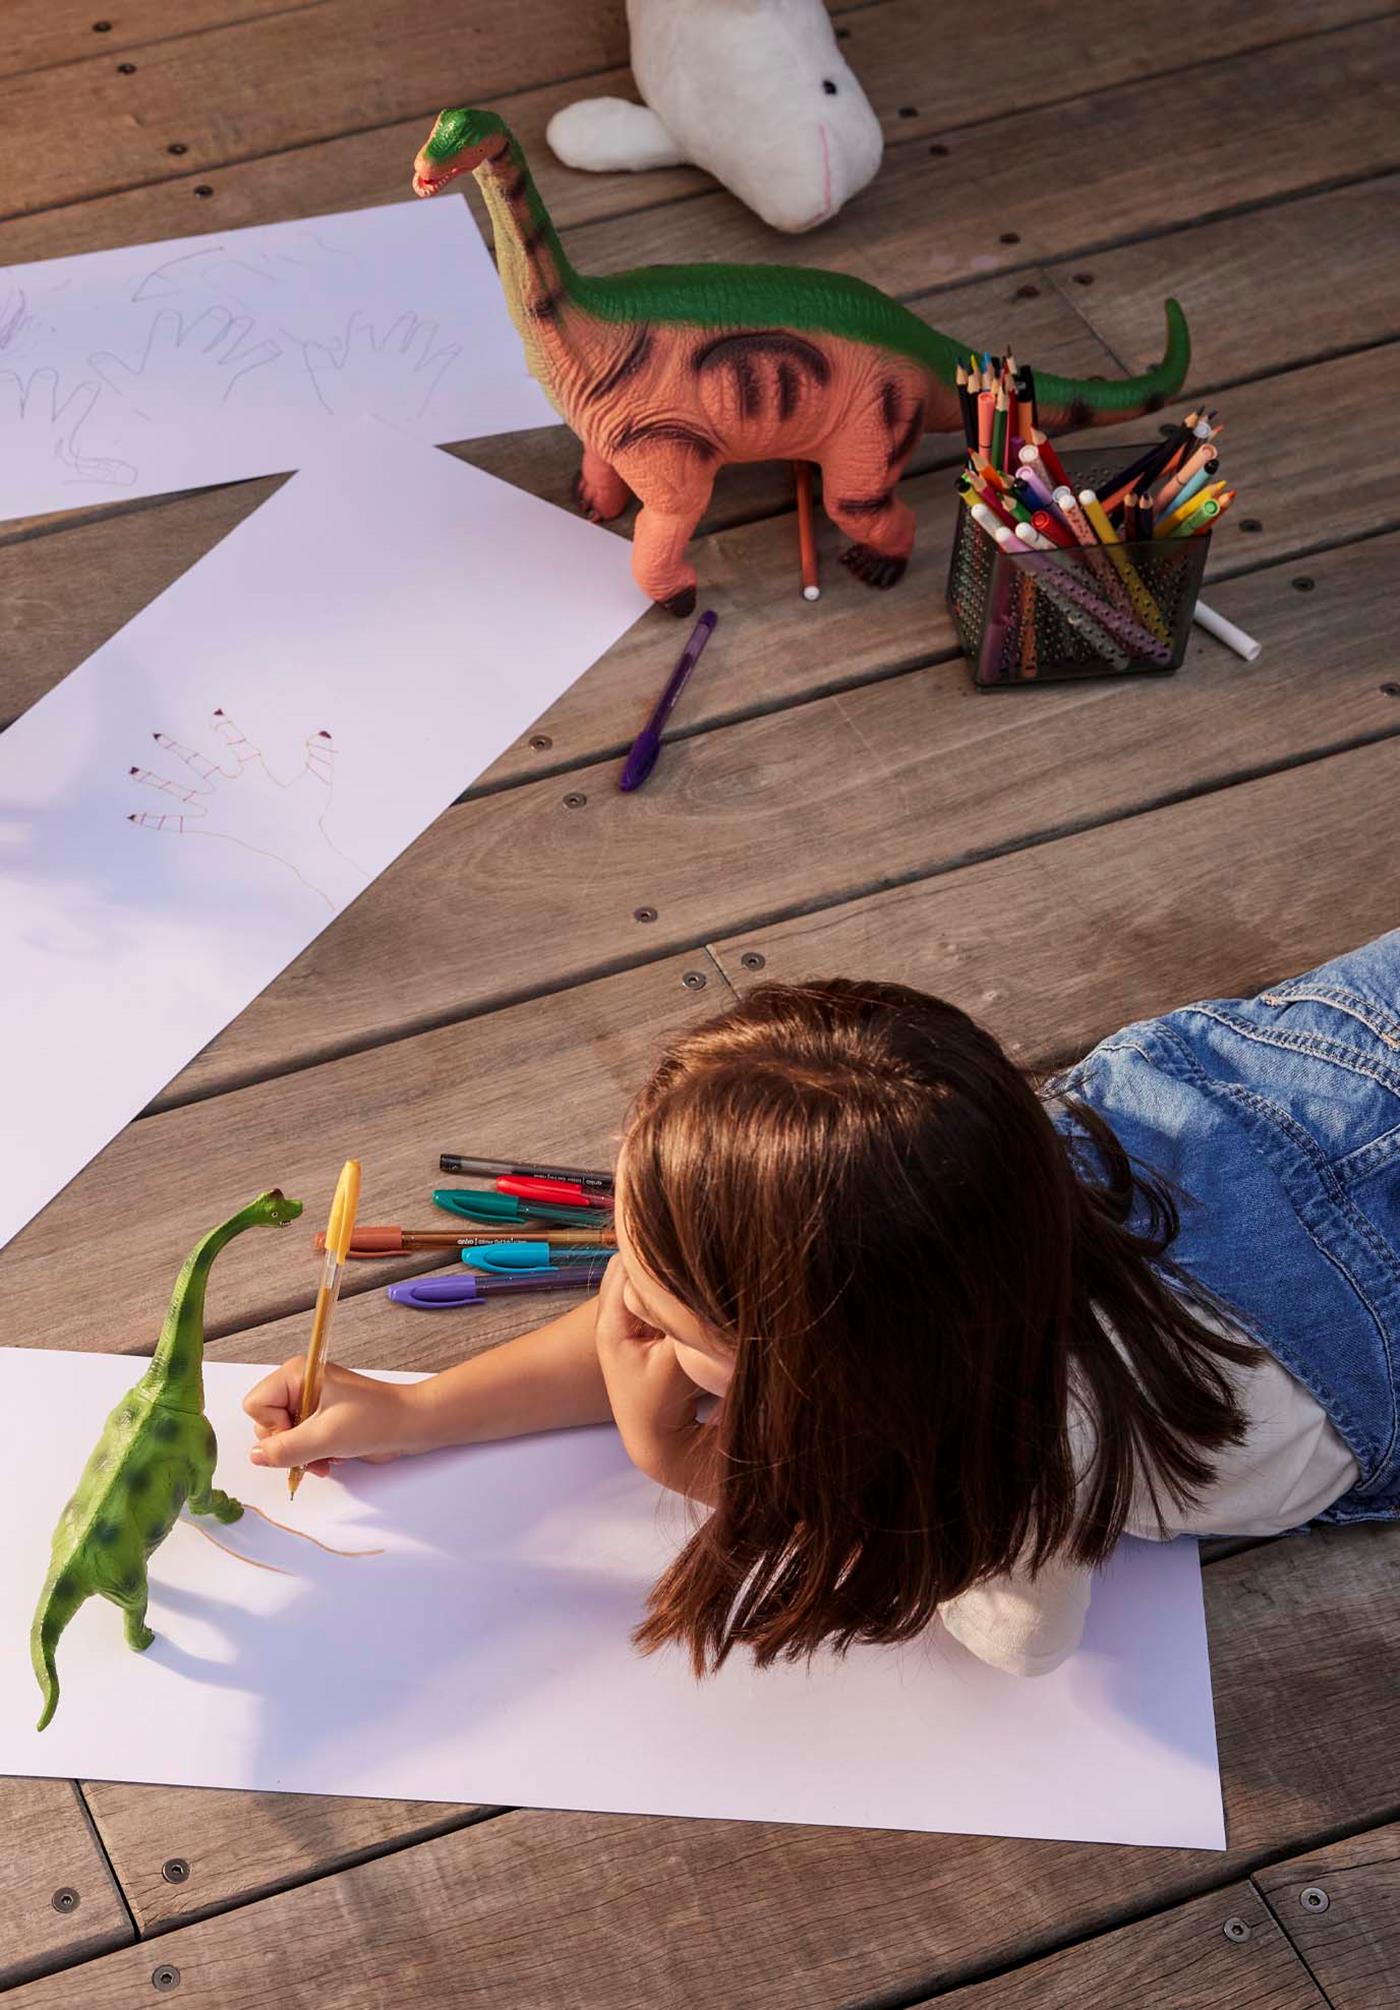 Child drawing dinosaurs